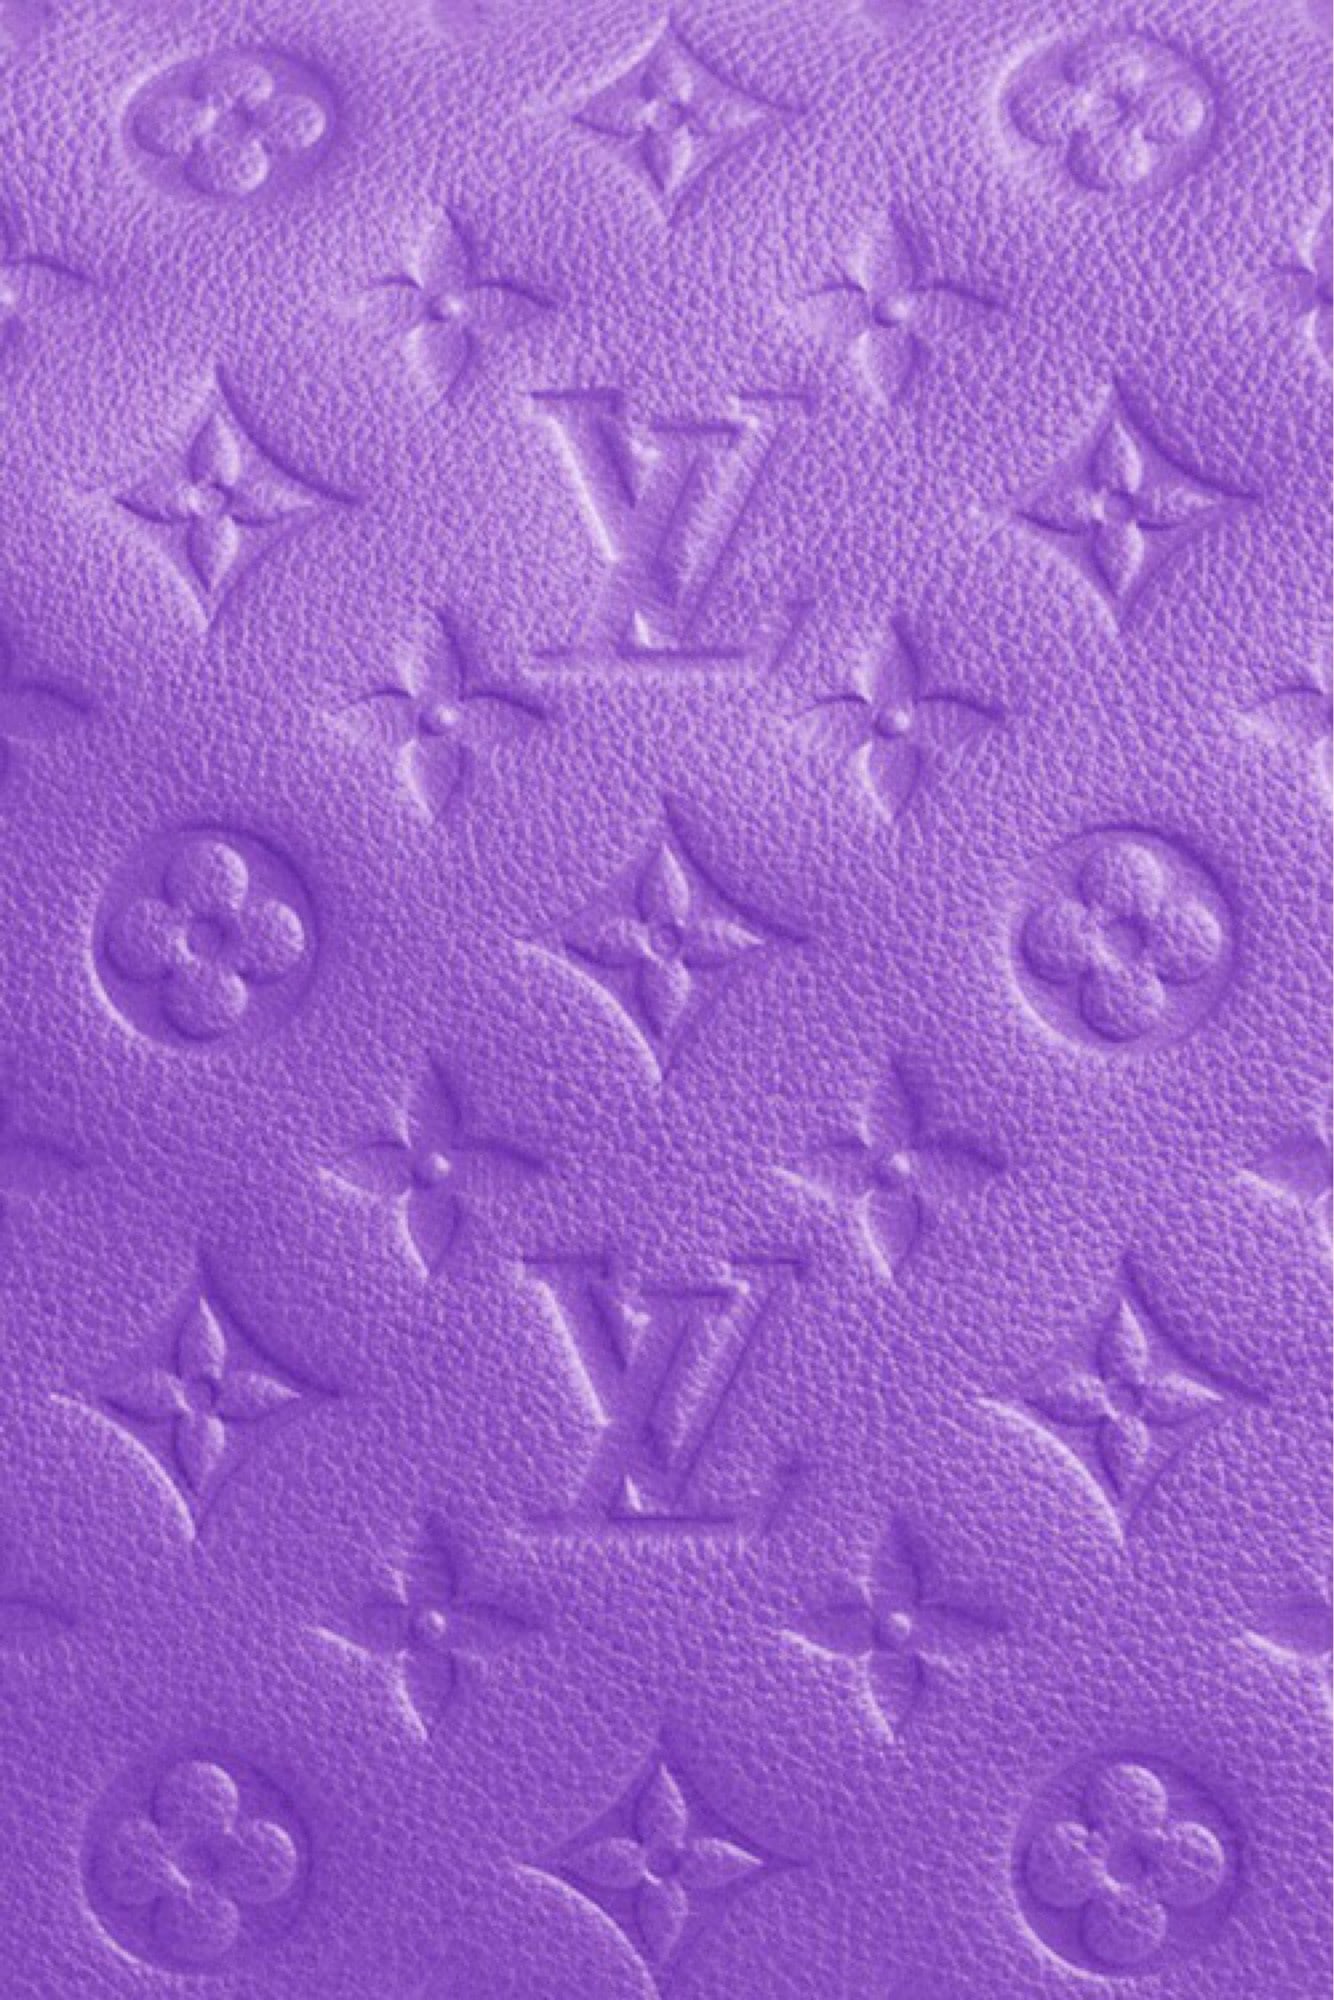 Purple lv wallpapaer  Louis vuitton iphone wallpaper, Bape wallpaper  iphone, Pretty wallpaper iphone